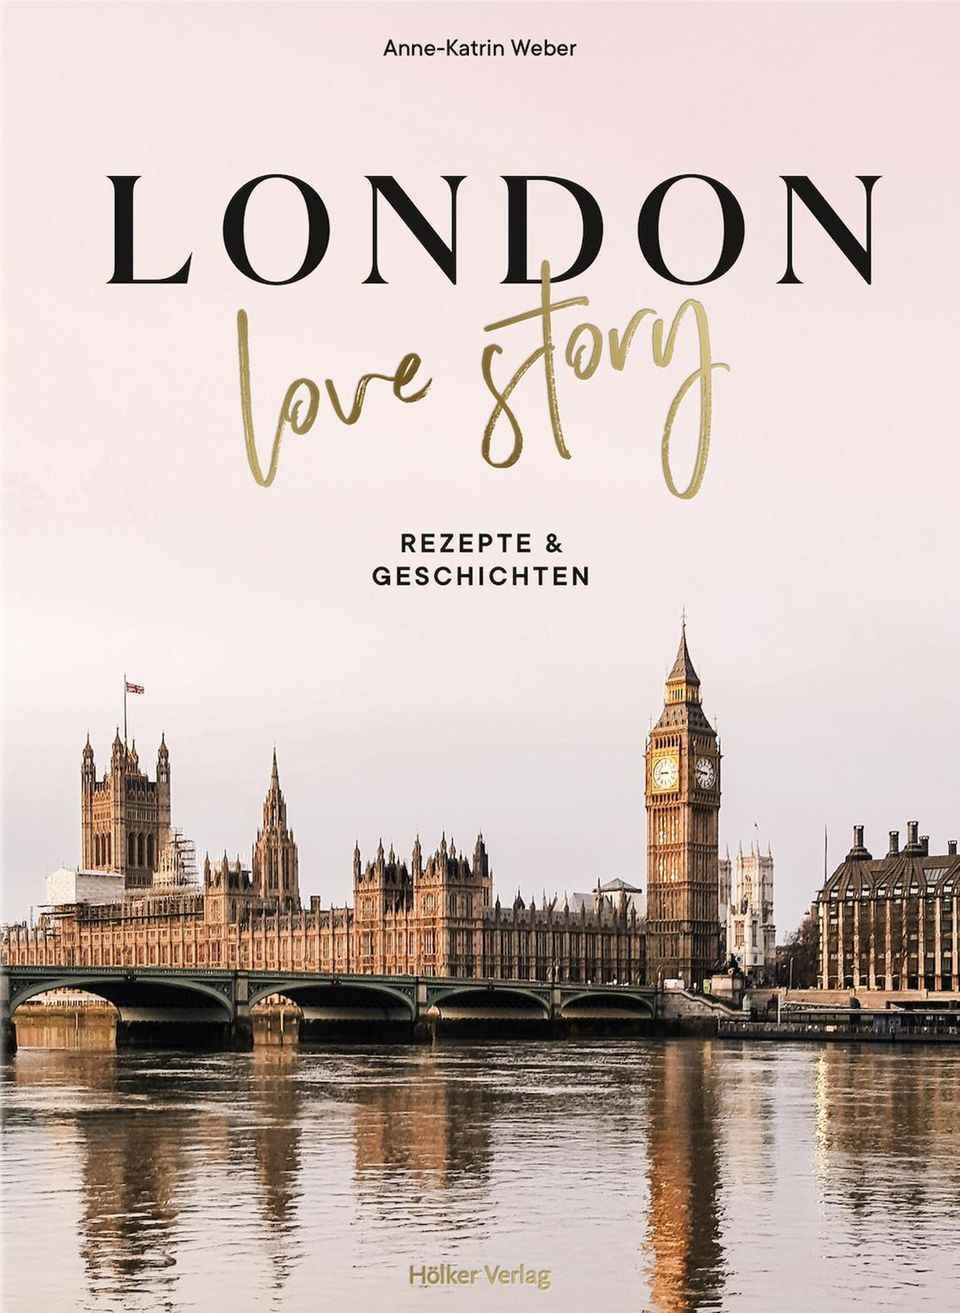 British Cuisine Classics: Book "London love story"